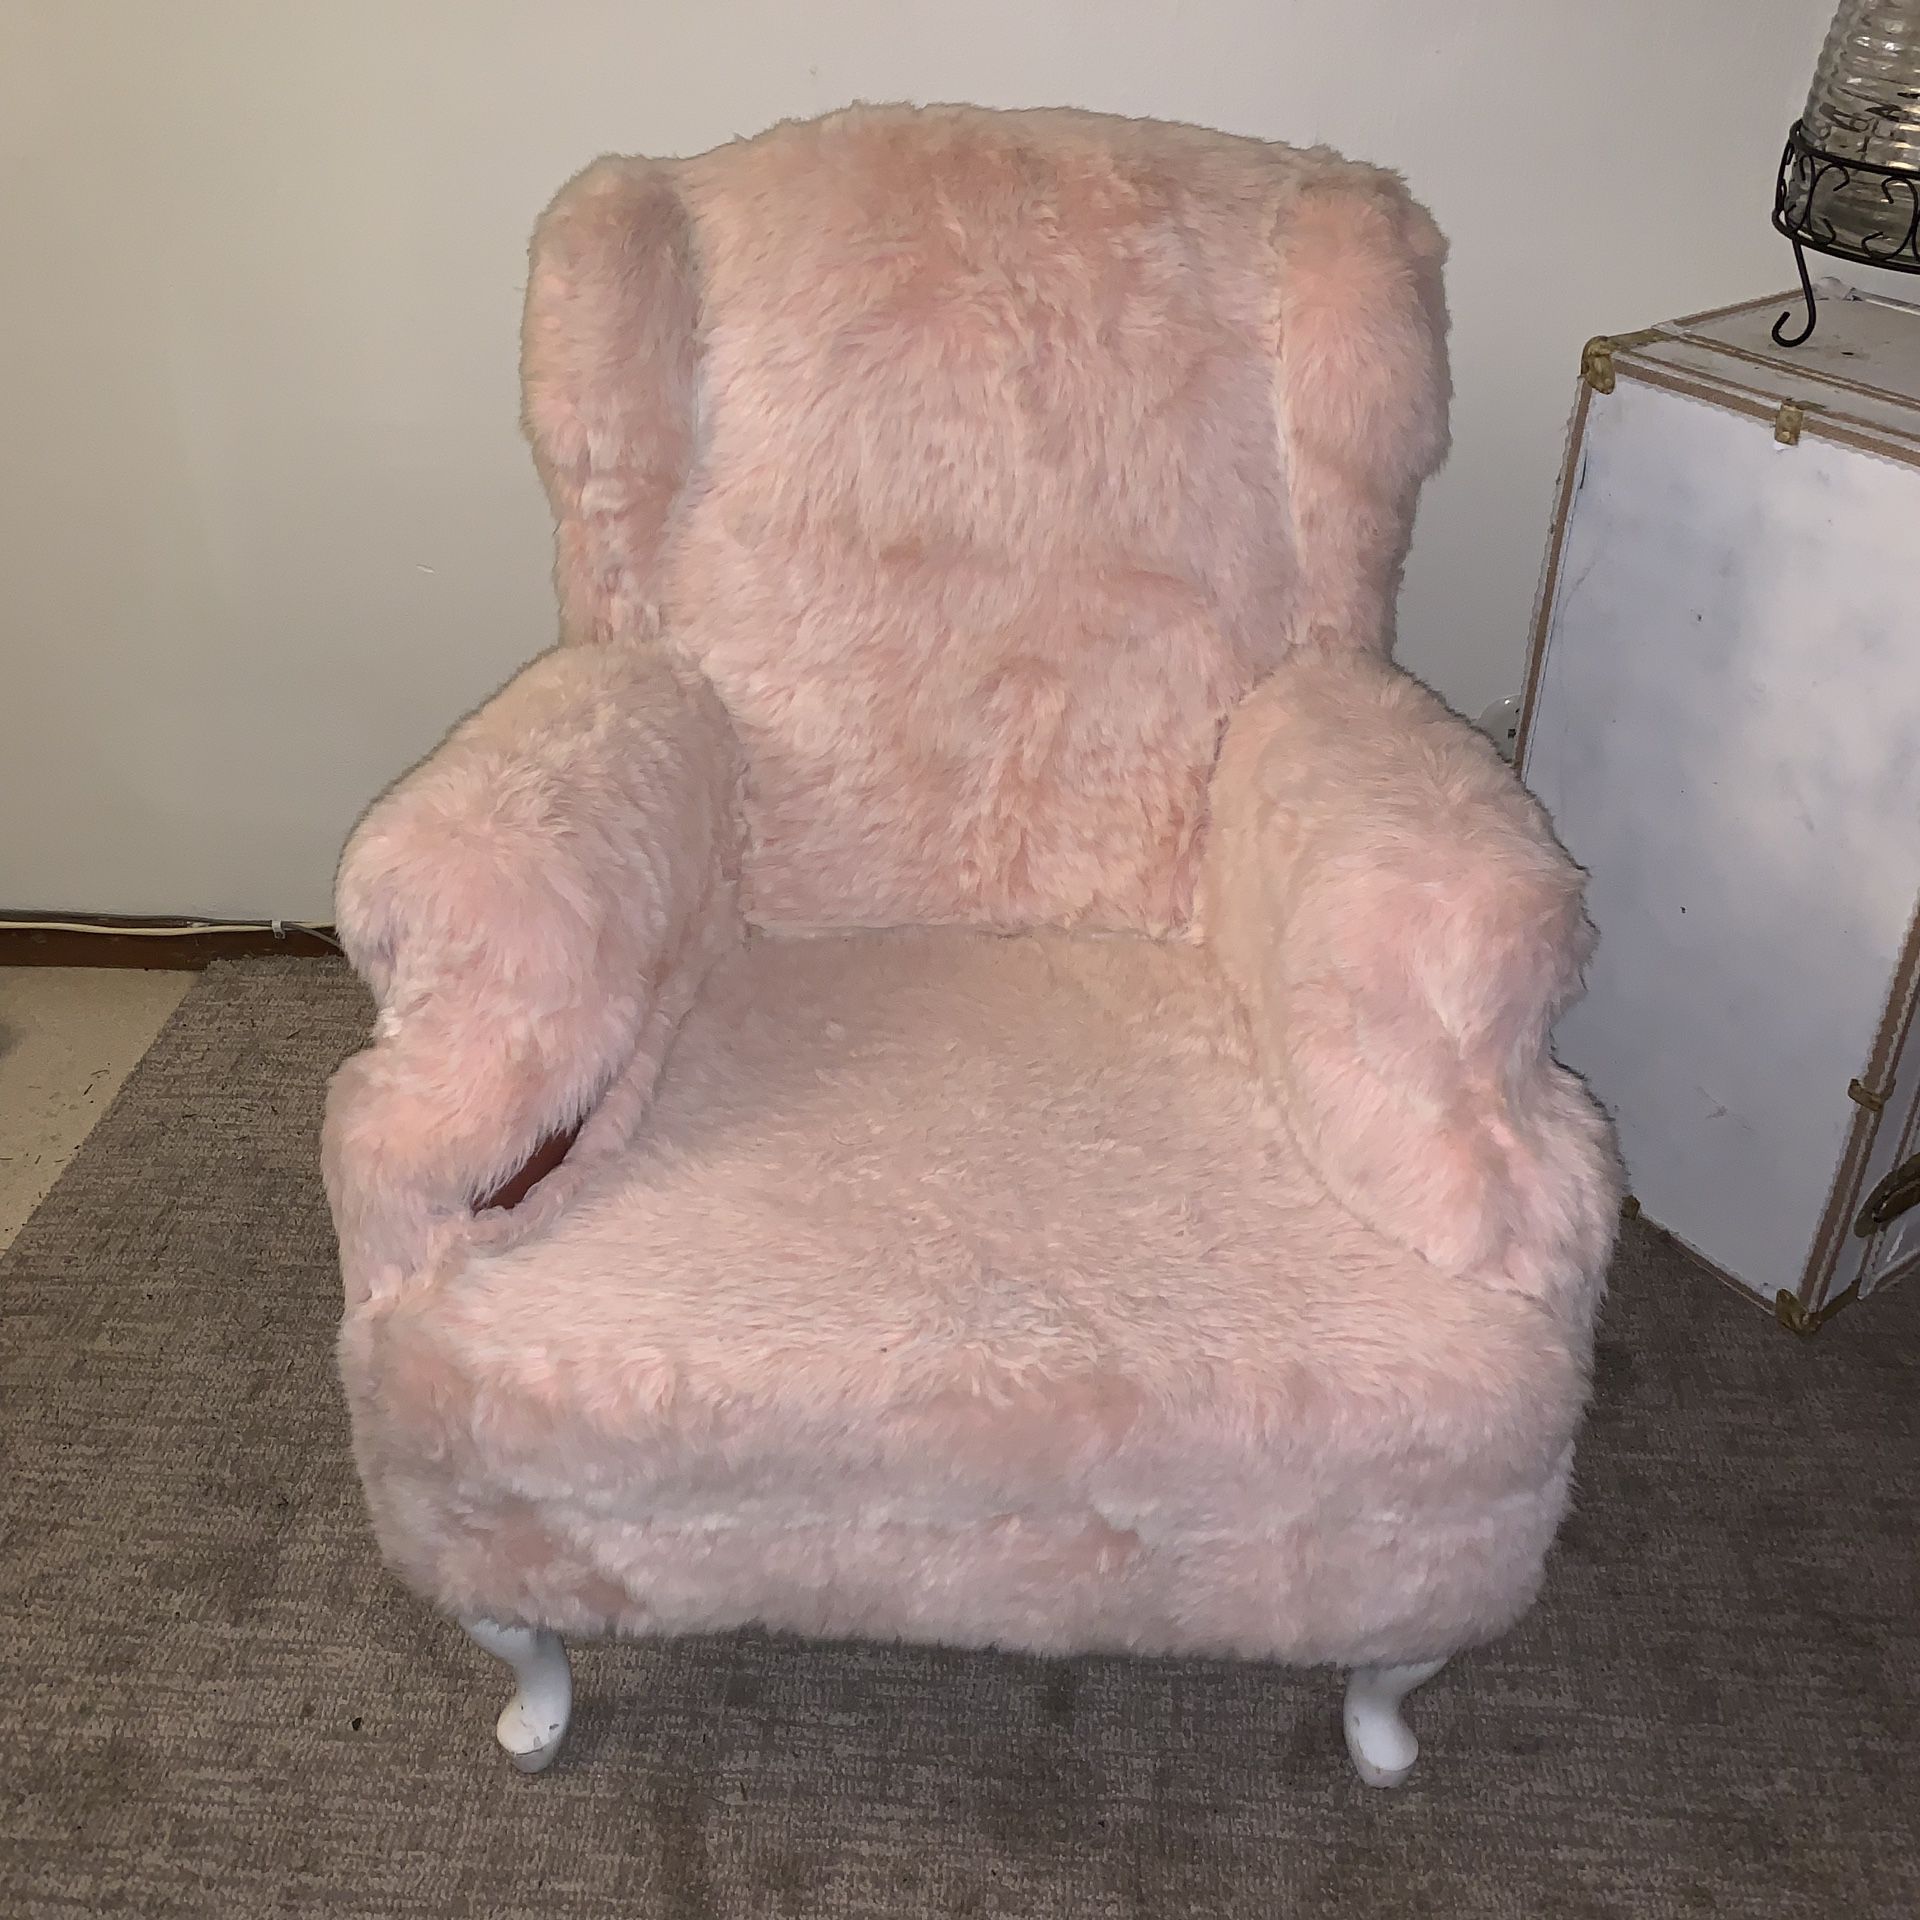 Pink fuzzy antique chair